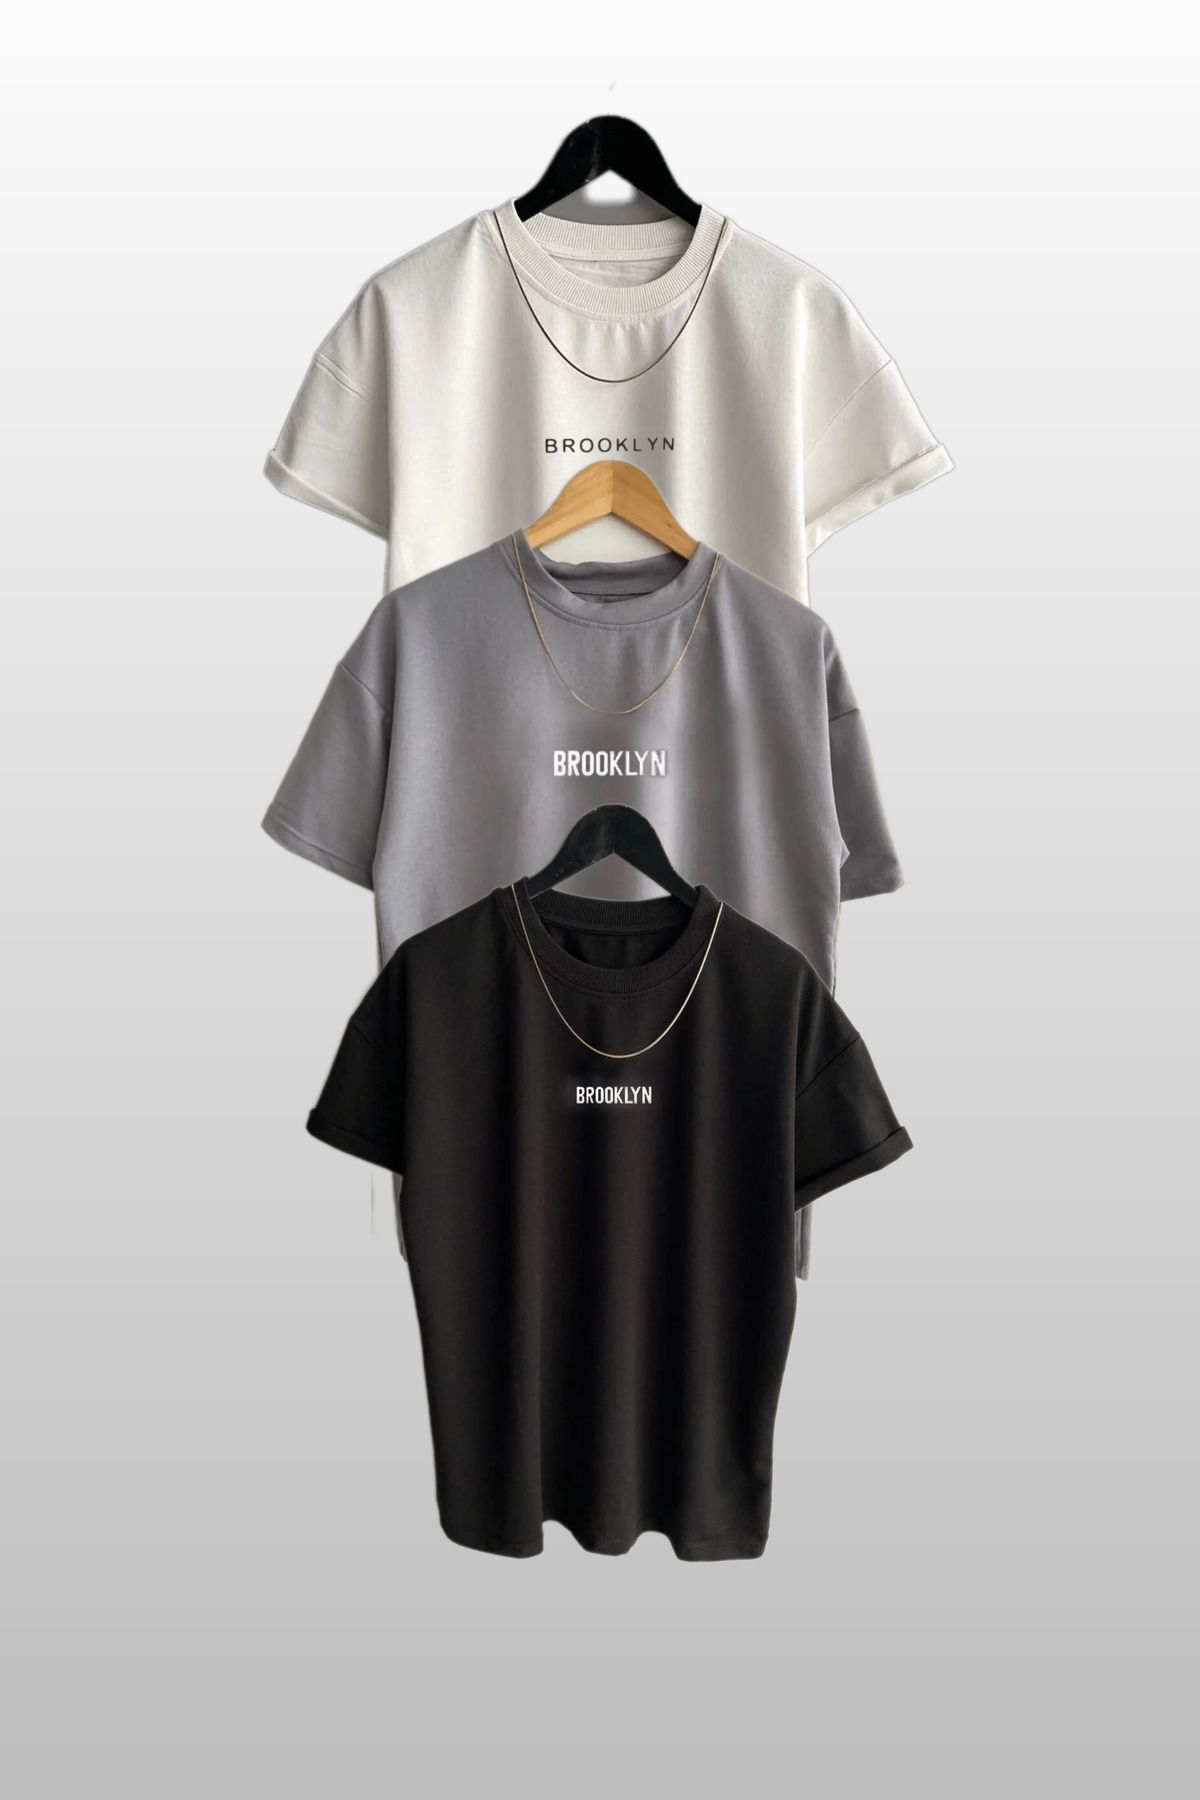 MODAGEN Unisex Brooklyn Baskılı 3lü Paket Siyah-Beyaz-Gri T-Shirt